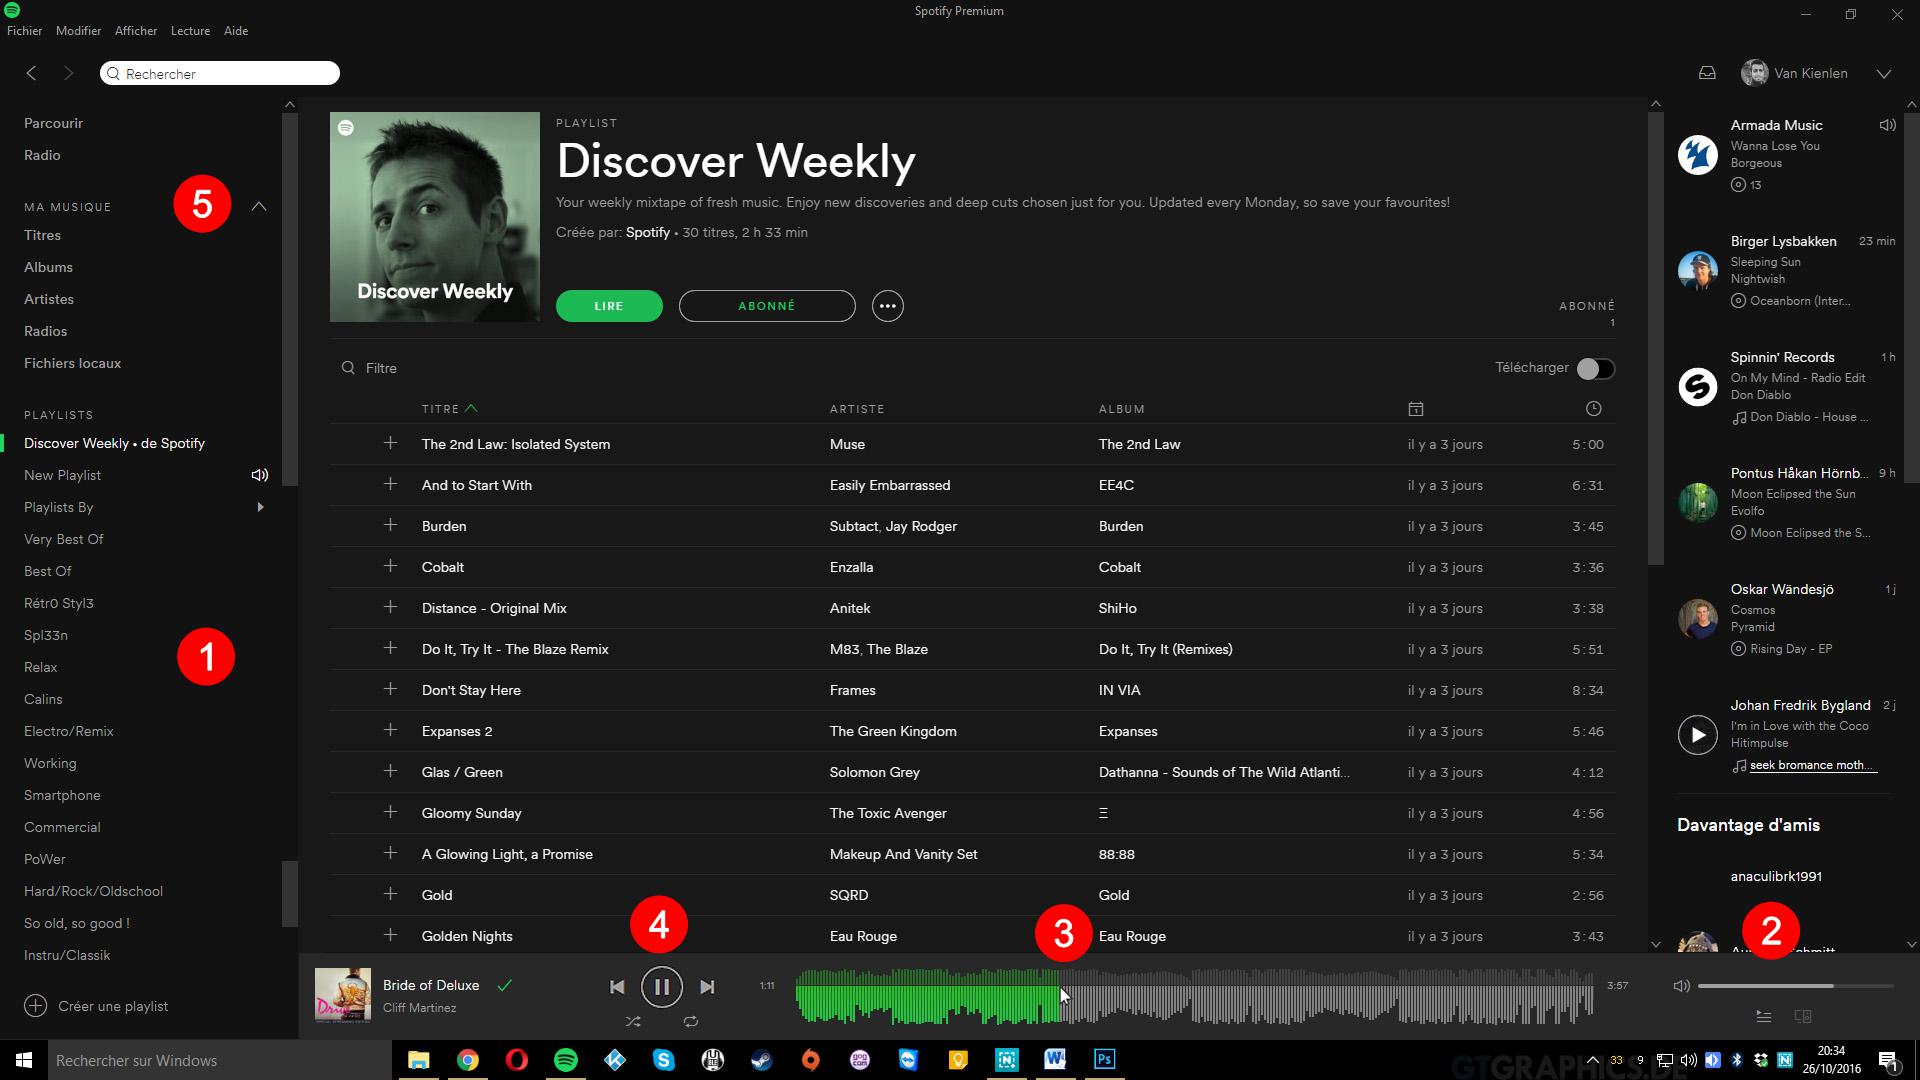 Download DesktopBrowse New UI Mockup - The Spotify Community